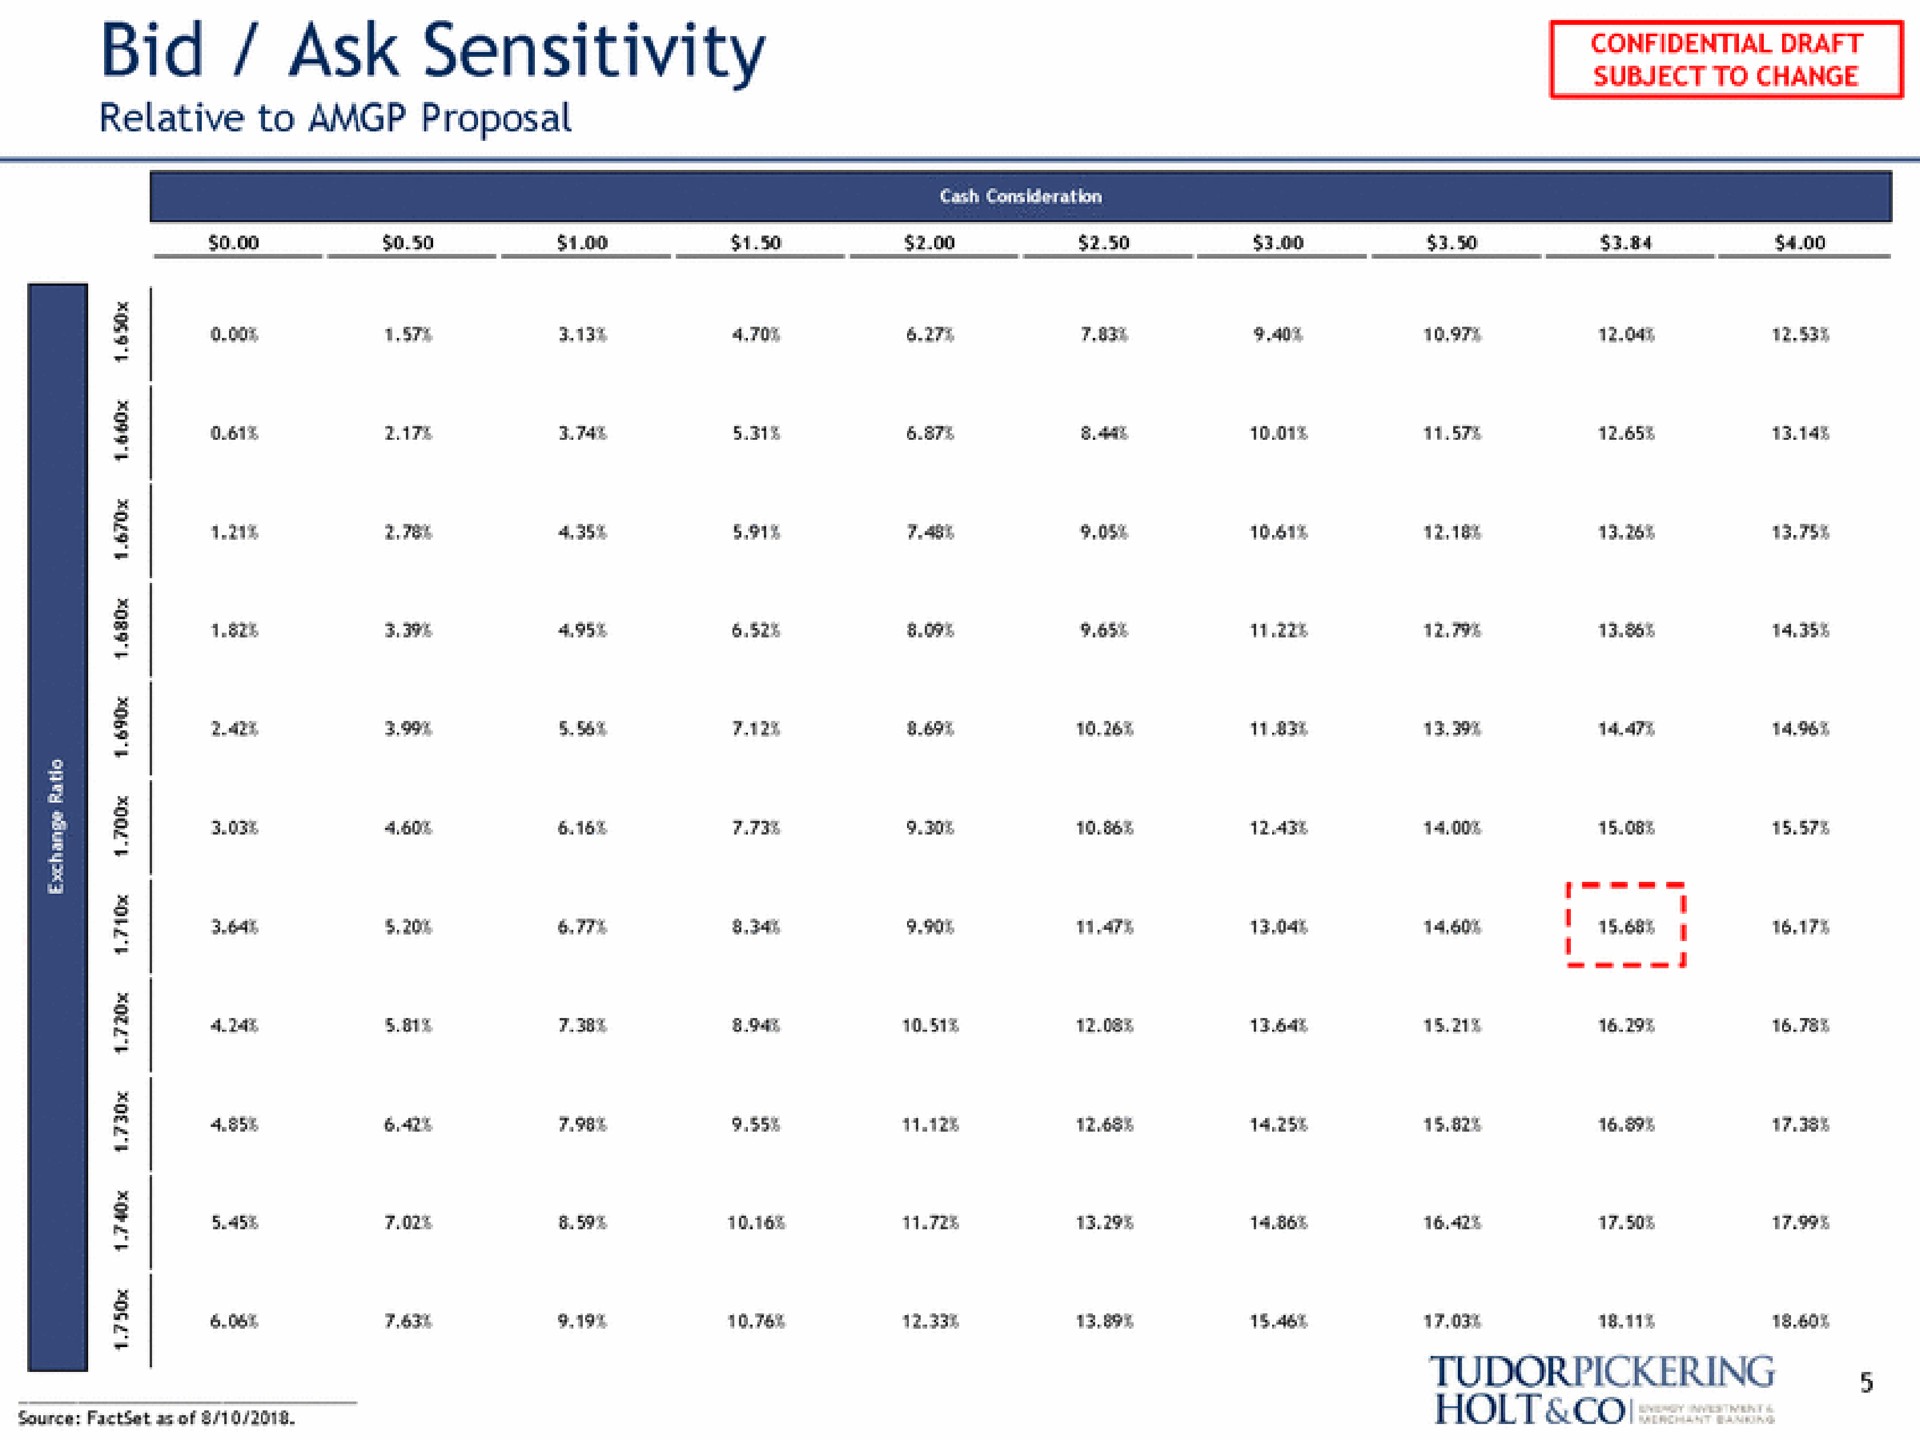 bid ask sensitivity relative to proposal | Tudor, Pickering, Holt & Co